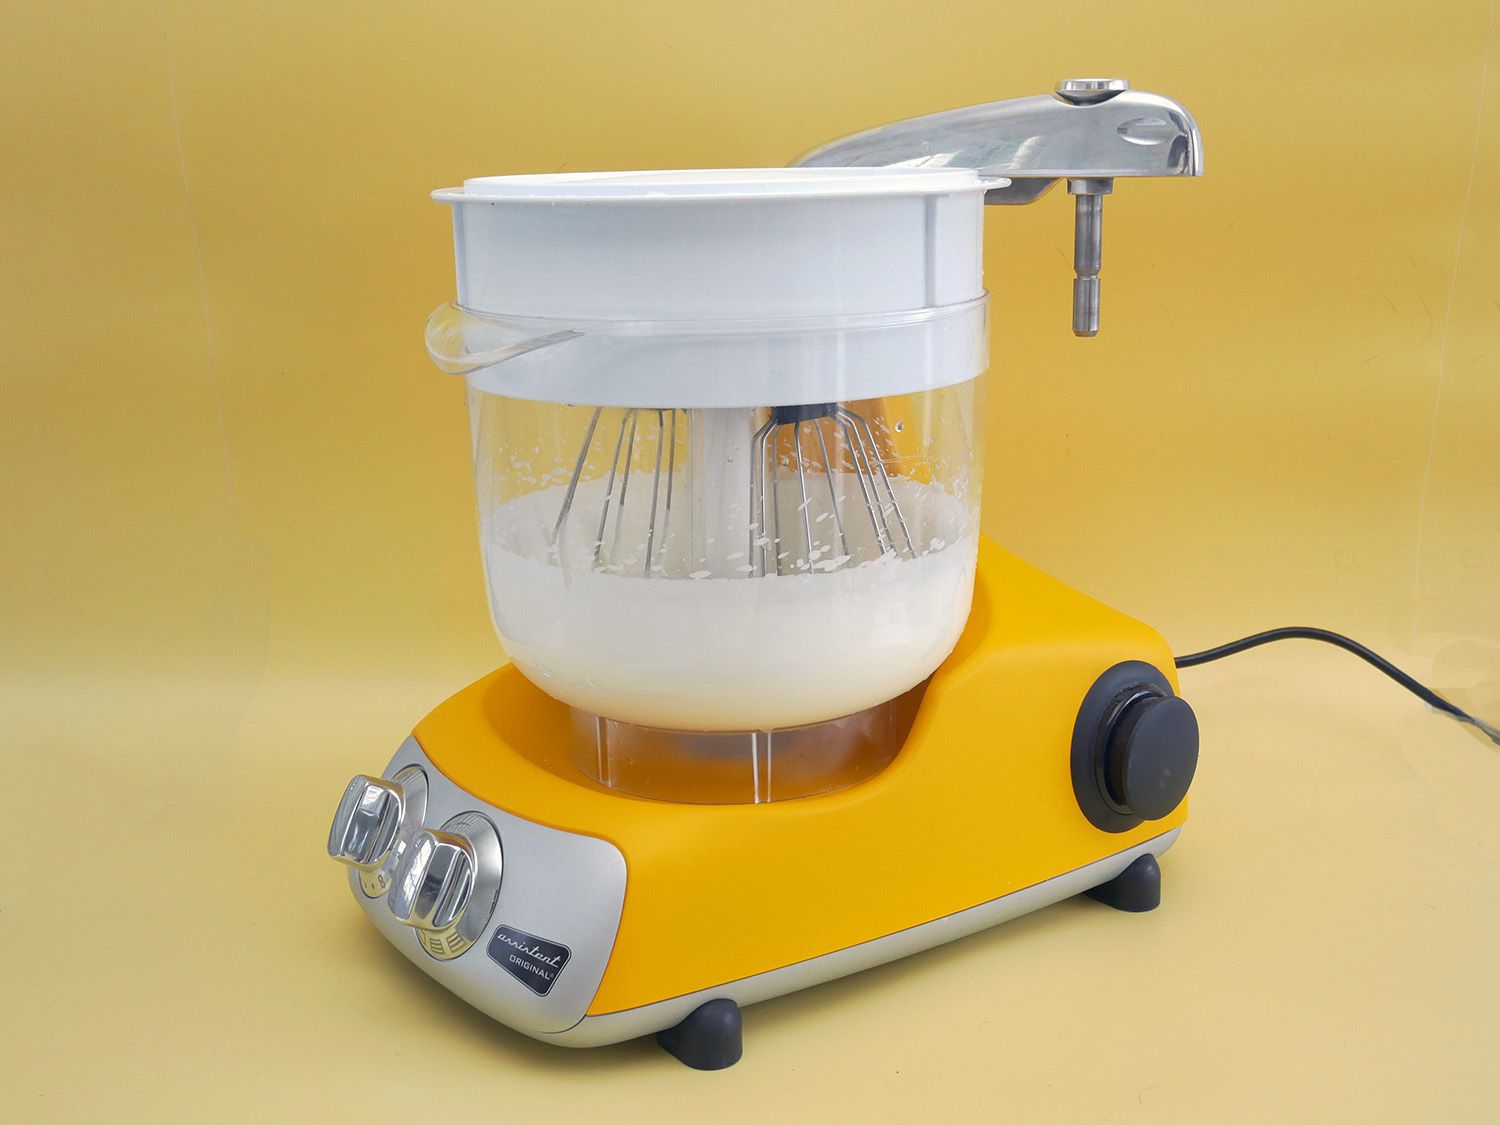 ankarsrum塑料碗和盖子,搅拌器附件用来制作奶油